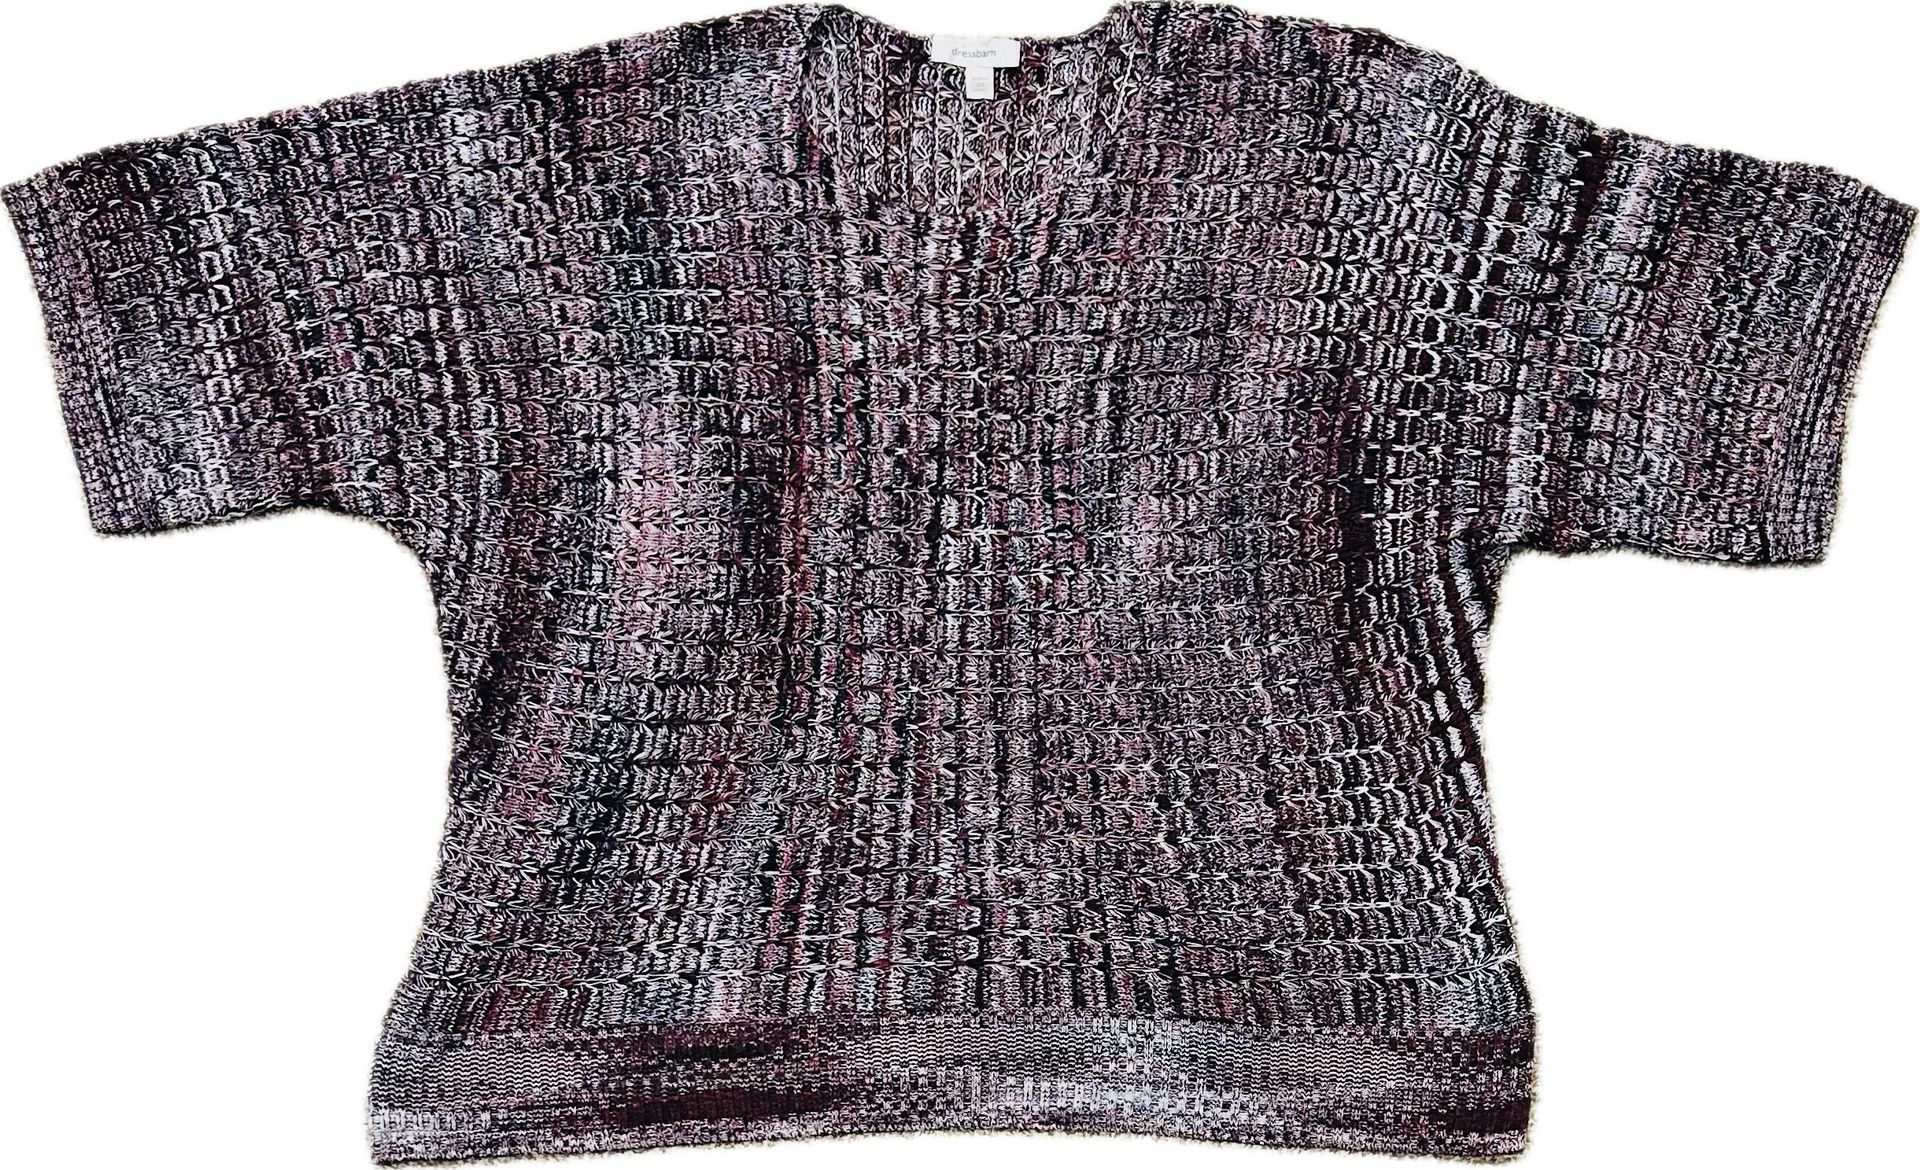 Dressbarn Women’s Sweater Plum Color Open Knit Tunic Short Sleeve 3X SUPER NICE!